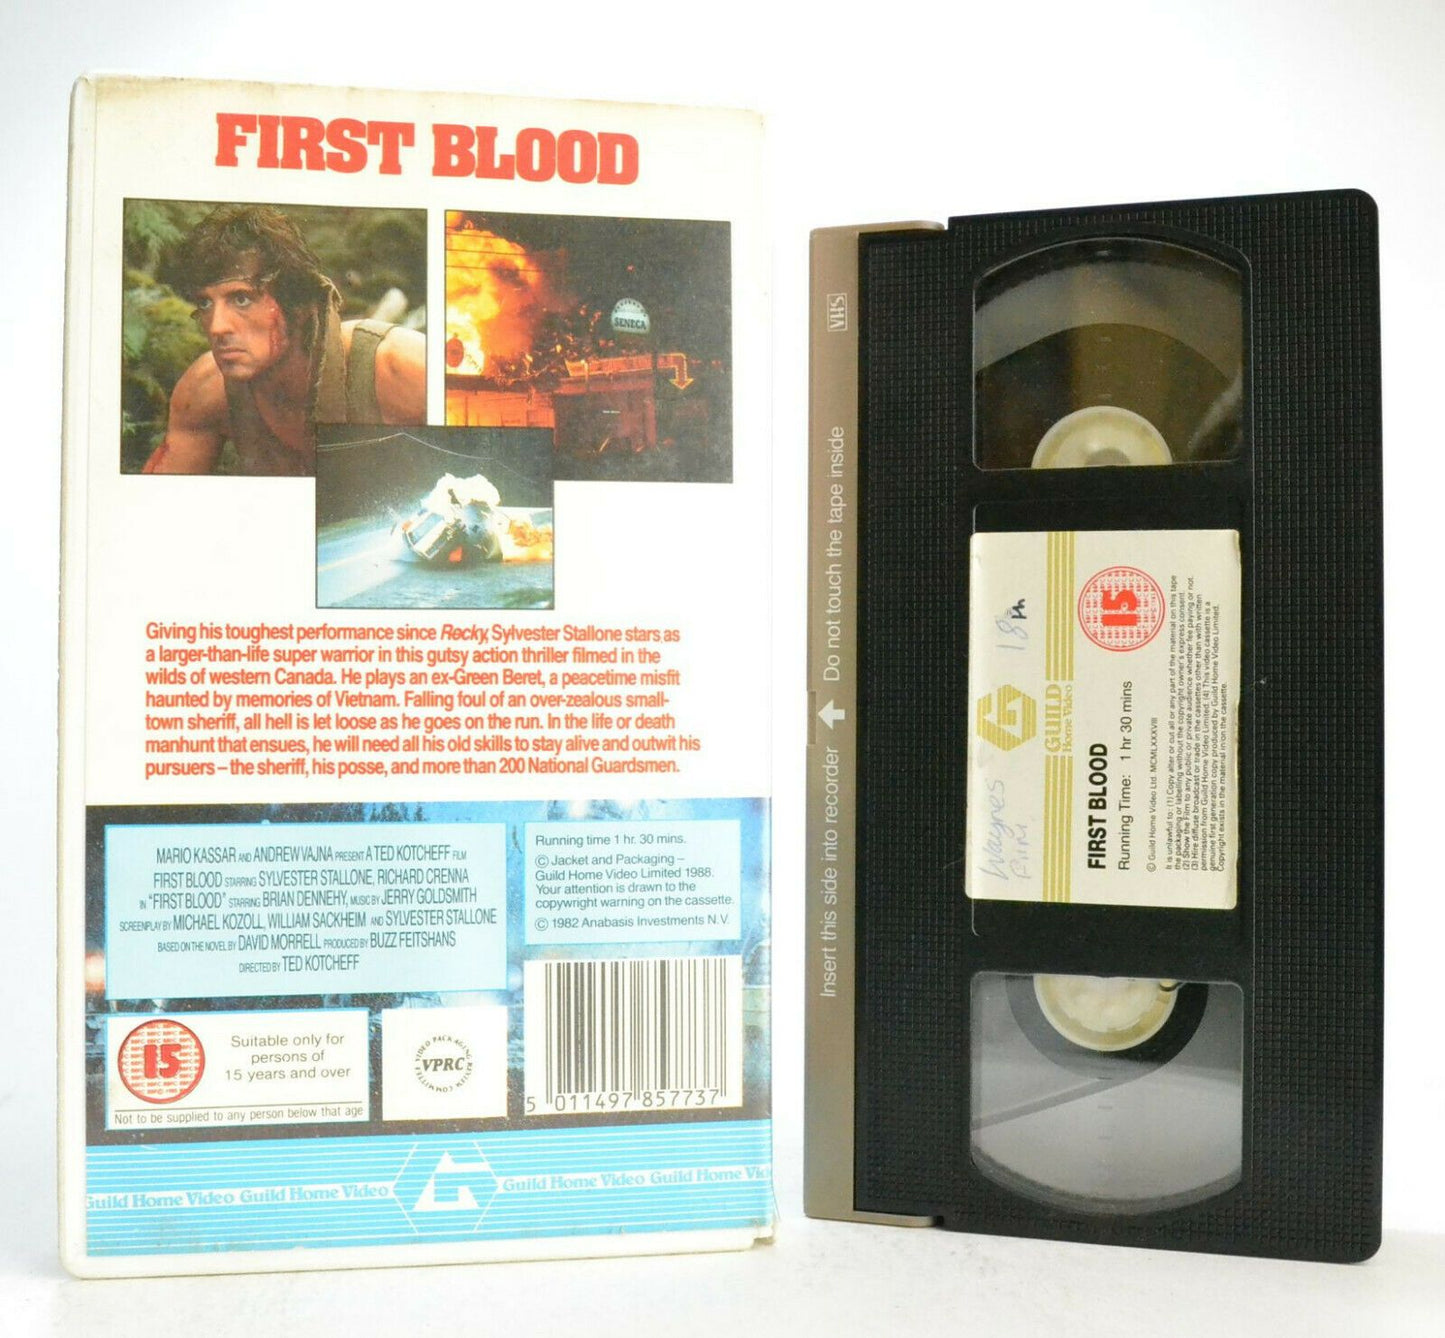 Rambo 1 First Blood - Iconic Sleeve Art - Stallone - Original 1988 - Guild - VHS - Golden Class Movies LTD